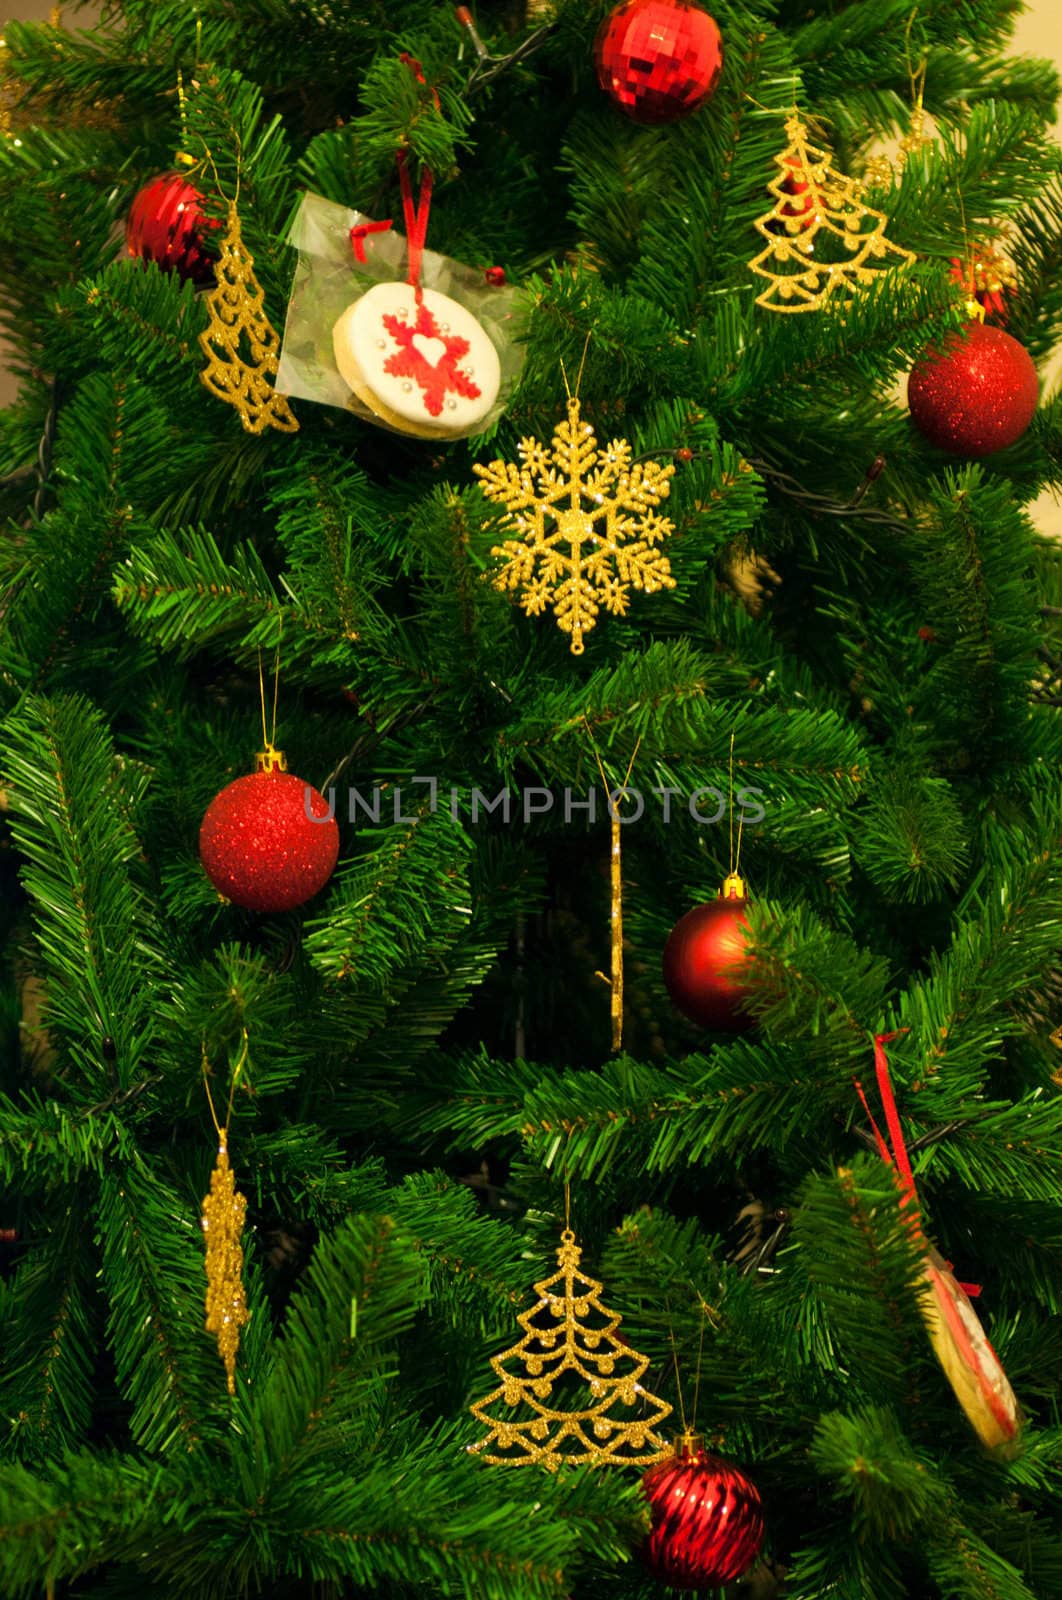 Christmas tree by luissantos84